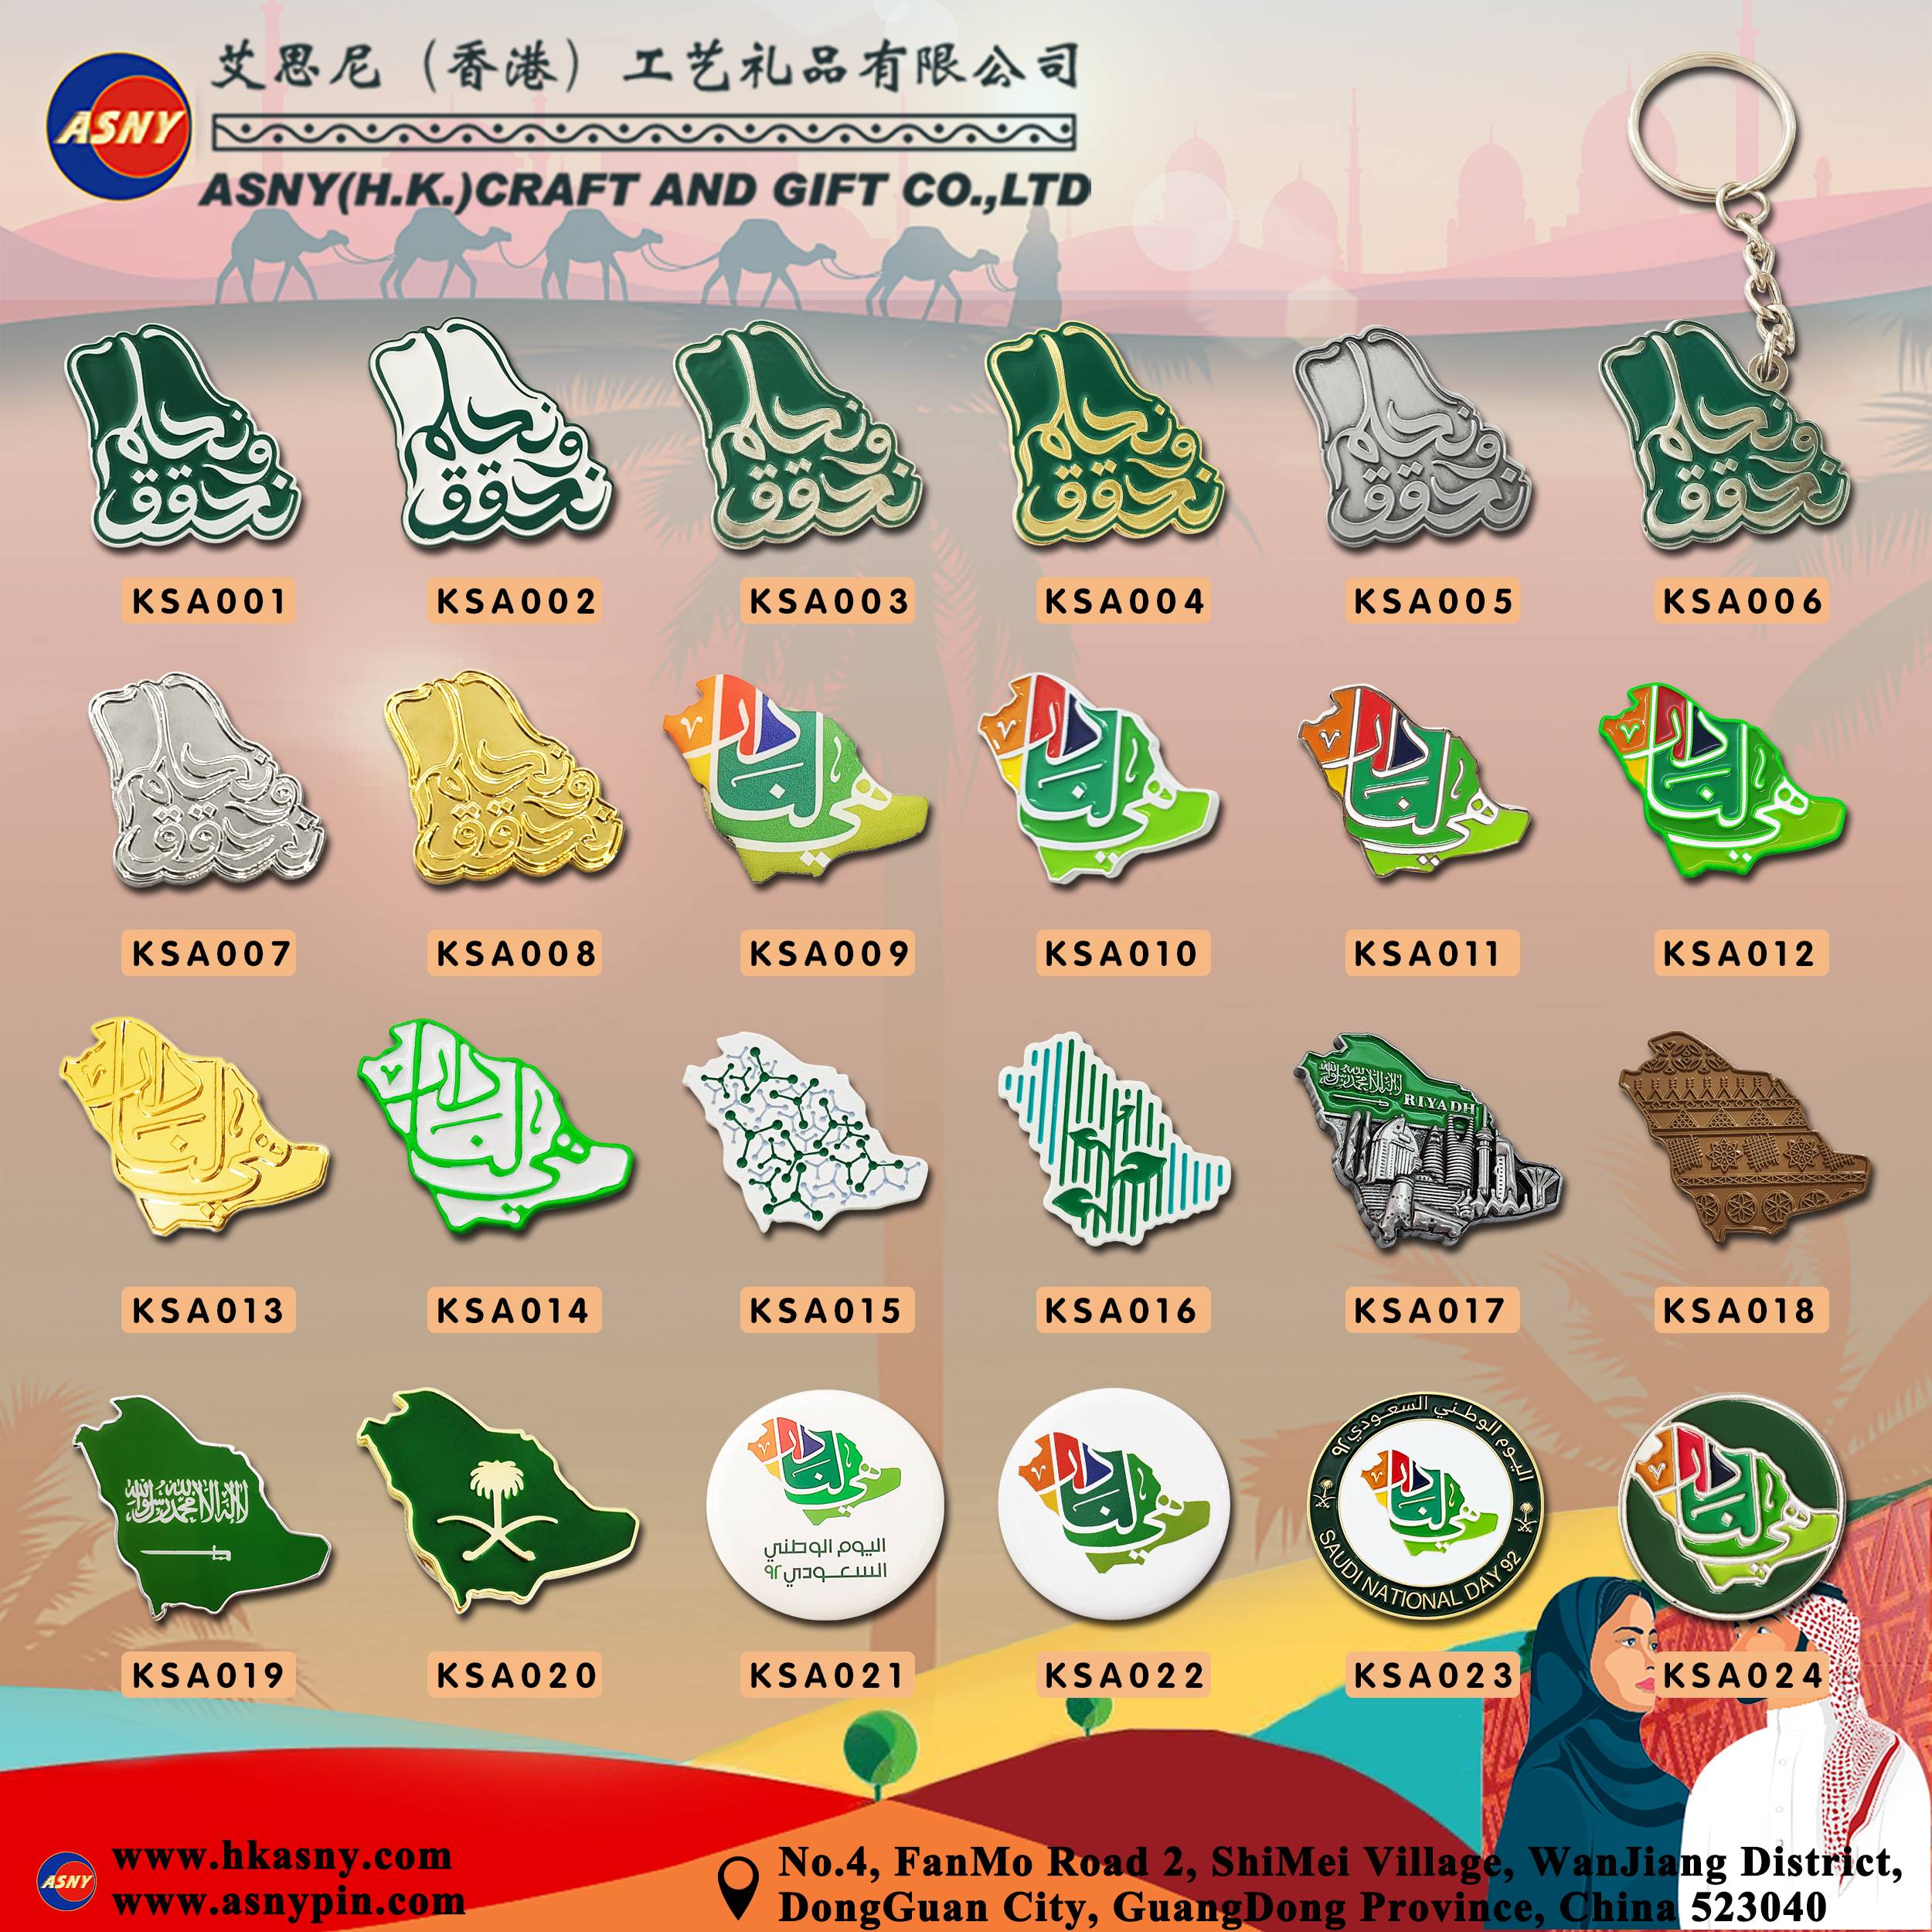 Catalog (9) - Saudi Arabia/KSA Map Souvenir/Promotional Item Design/Production/Make/Supply/Factory